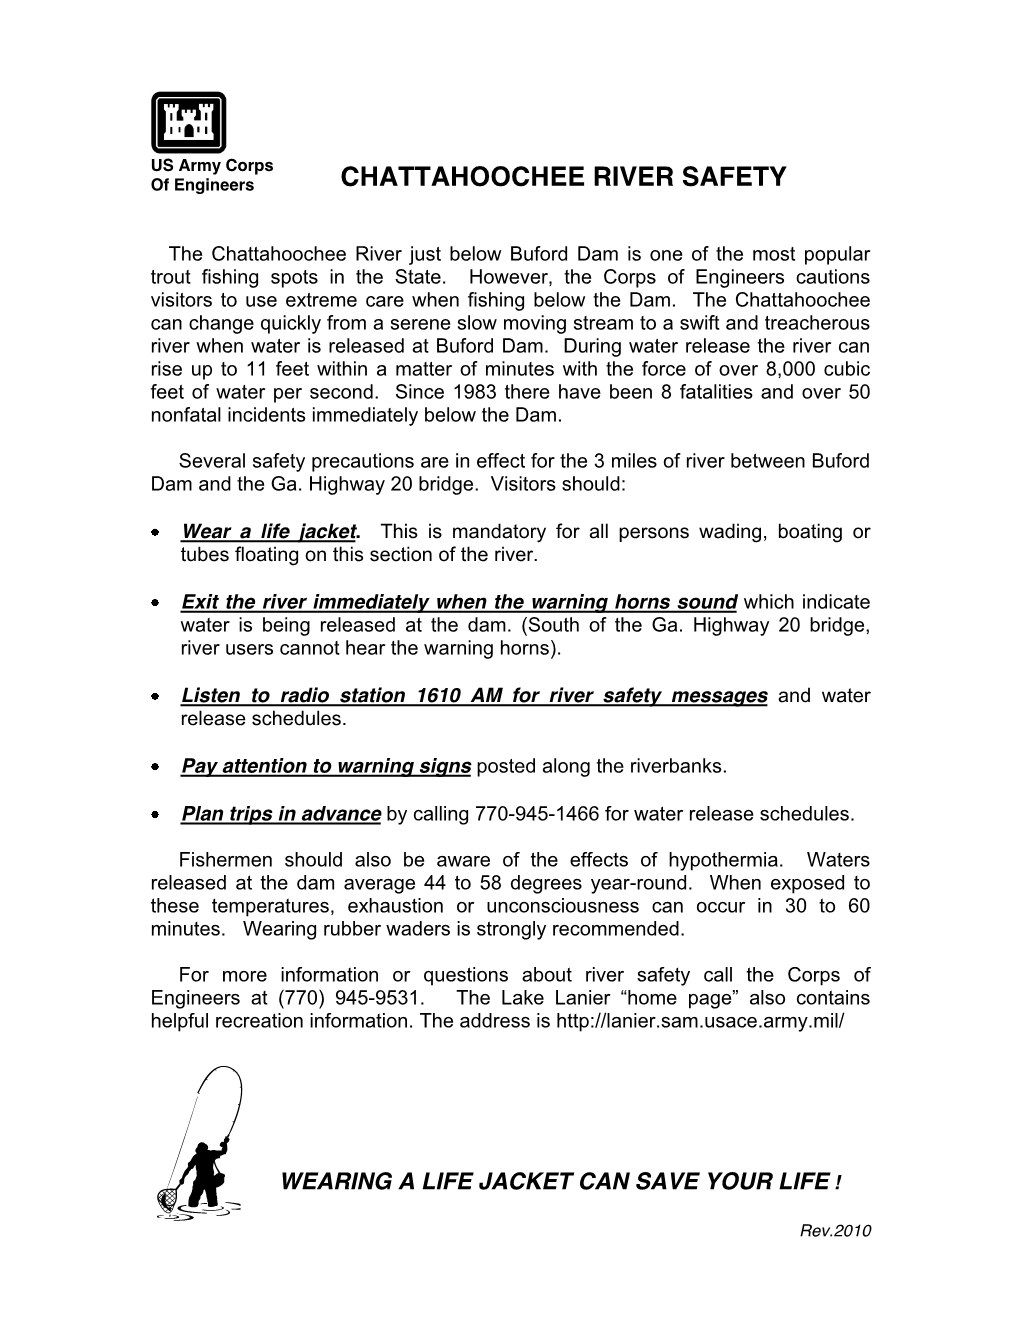 Chattahoochee River Safety